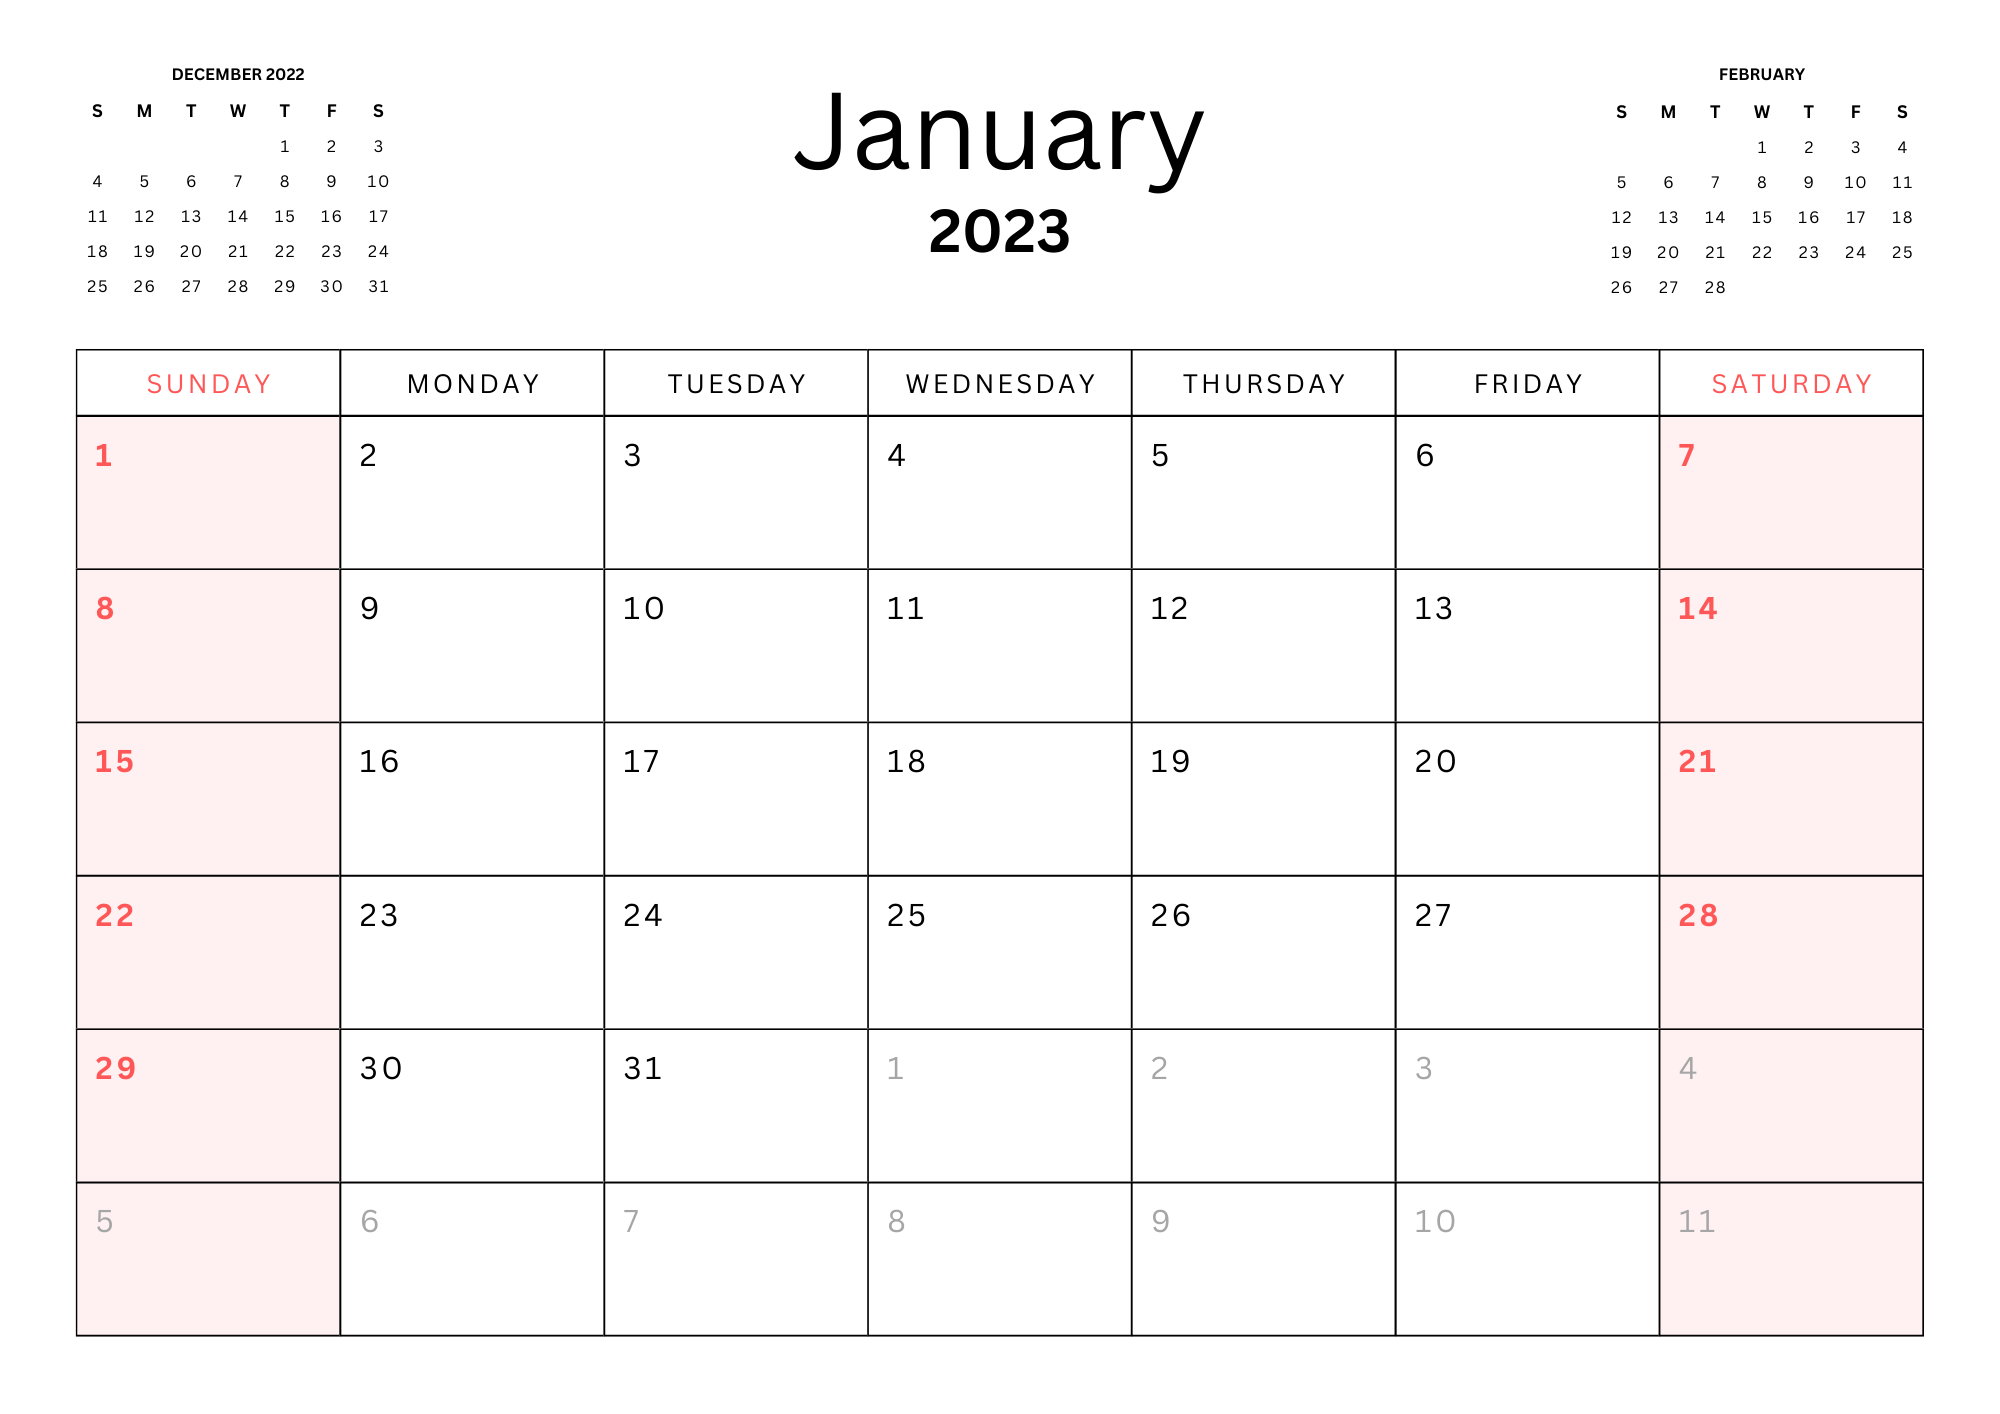 January 2023 Calendar - Template Free Download | Speedy Template